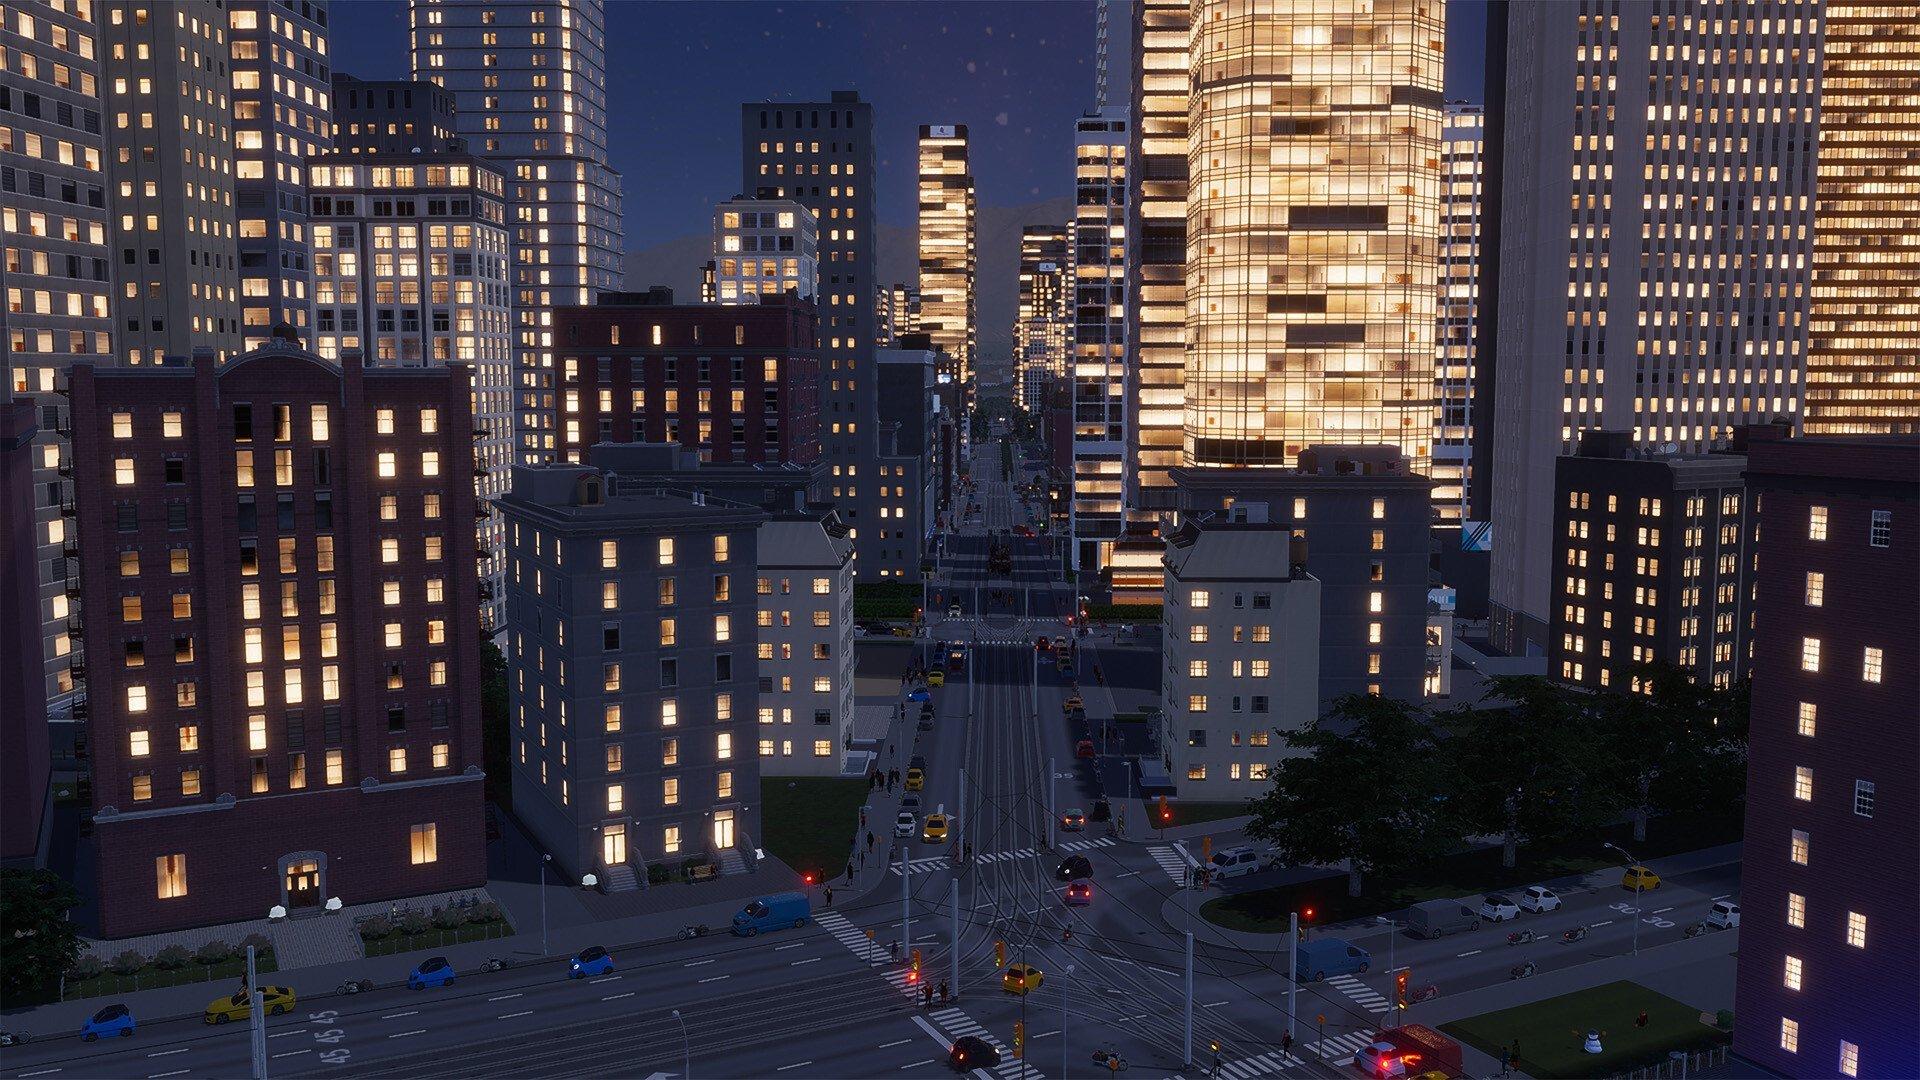 Buy Cities: Skylines II - Ultimate Edition Steam